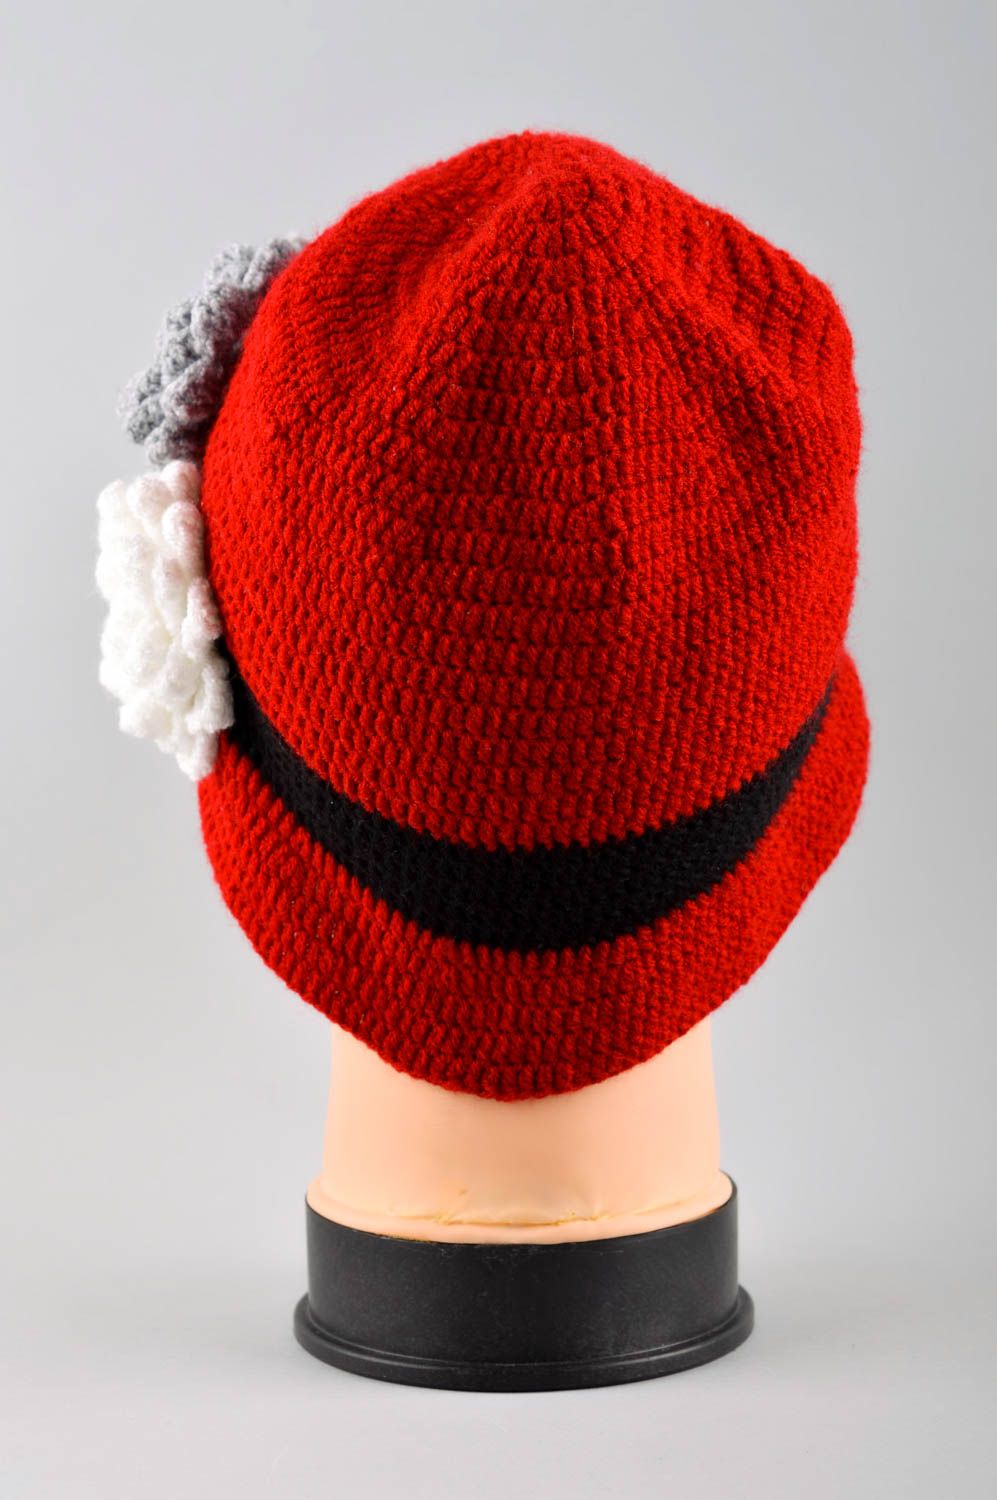 Handmade winter hat designer cap for girl gift ideas warm hat knitted hat photo 4